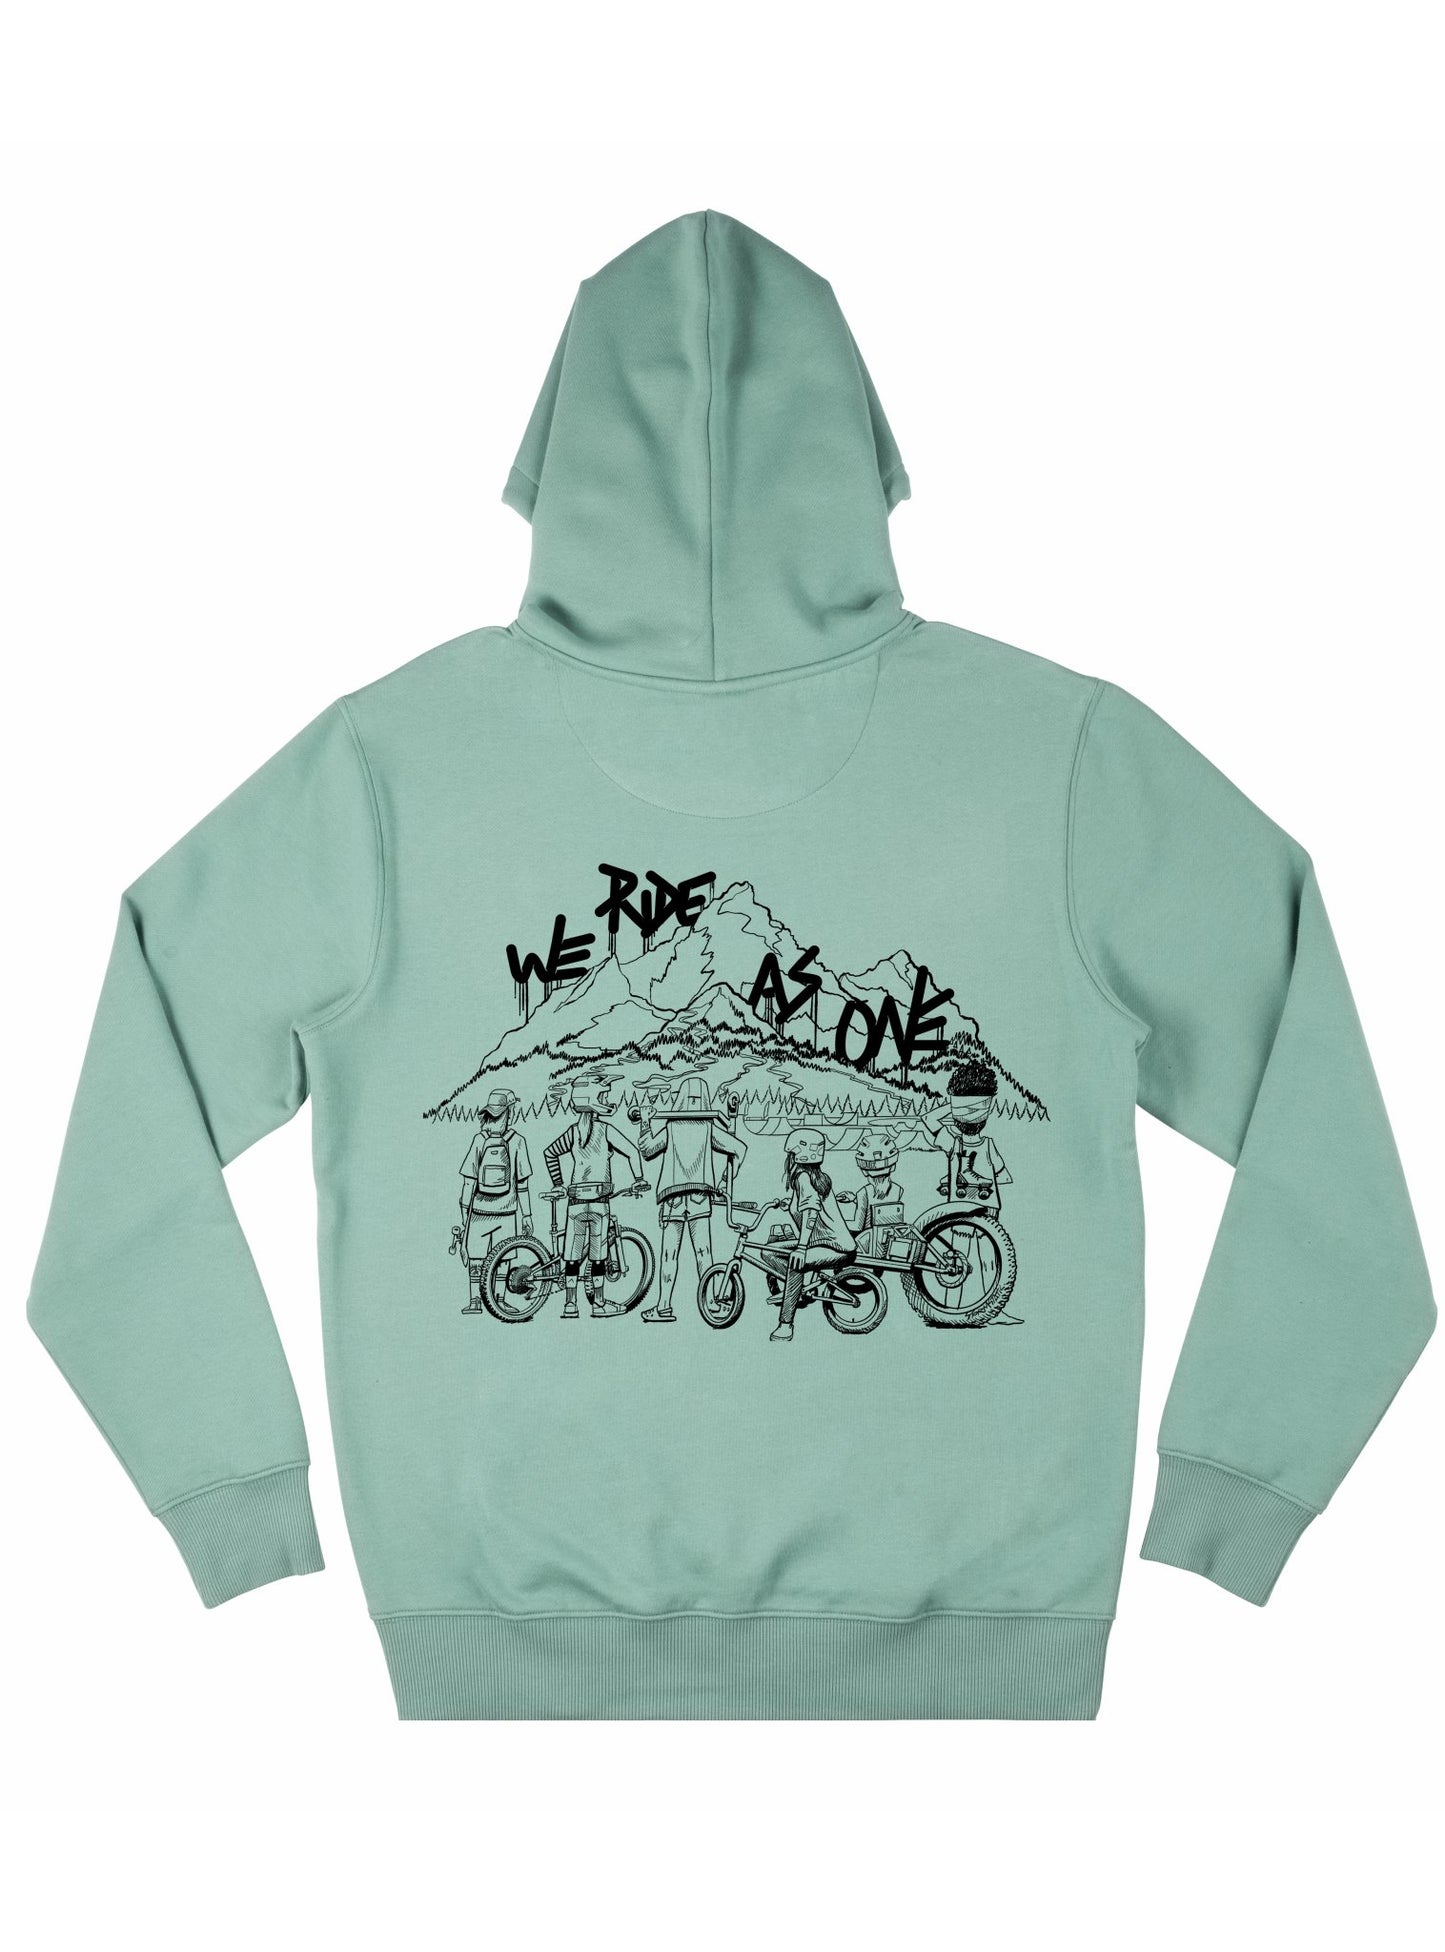 We Ride as One Hoodie - Shred Like a Girl